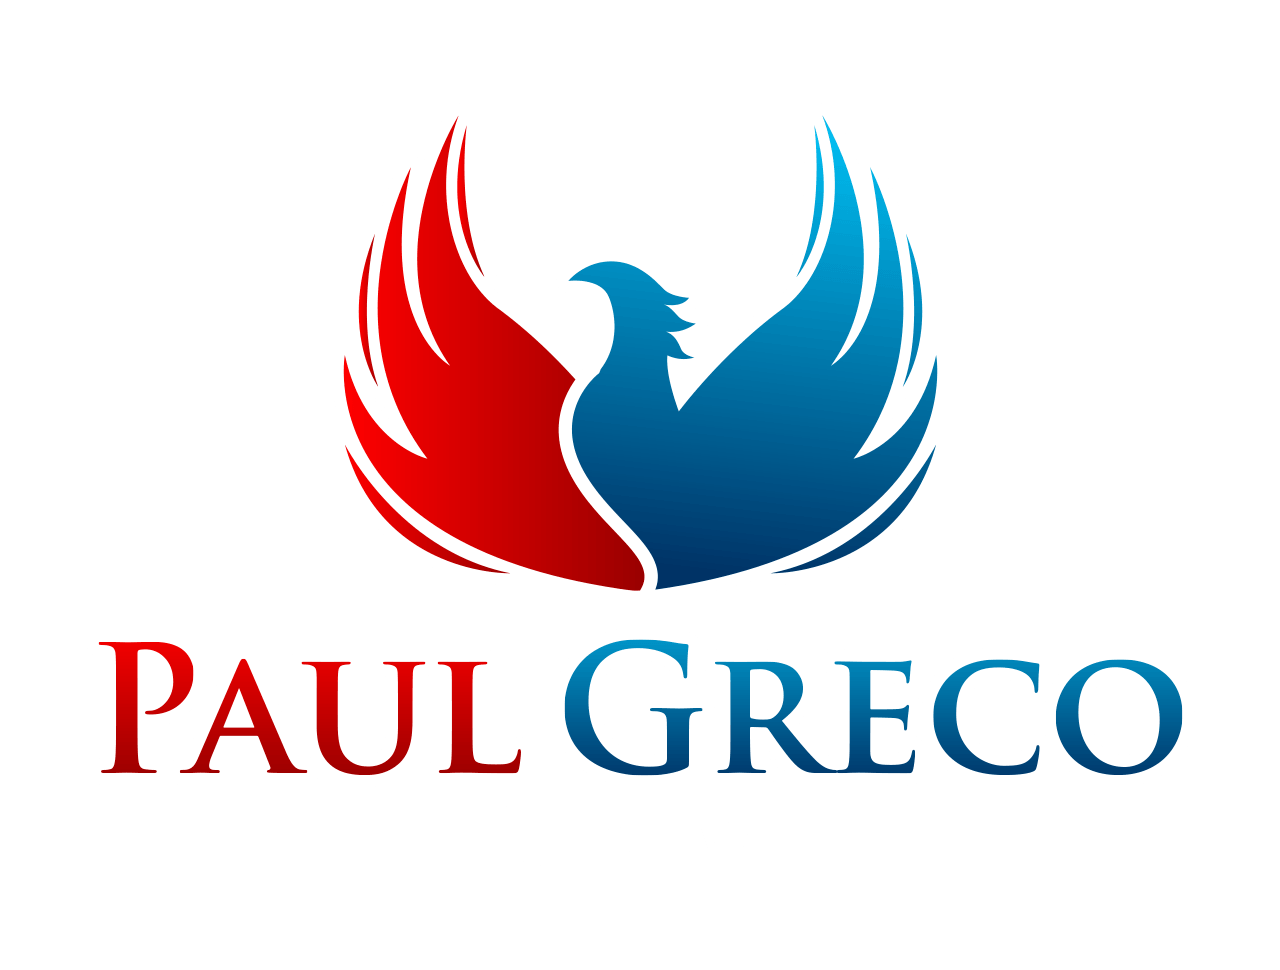 Paul Greco Law| lawyer | Criminal Law | Civil Law